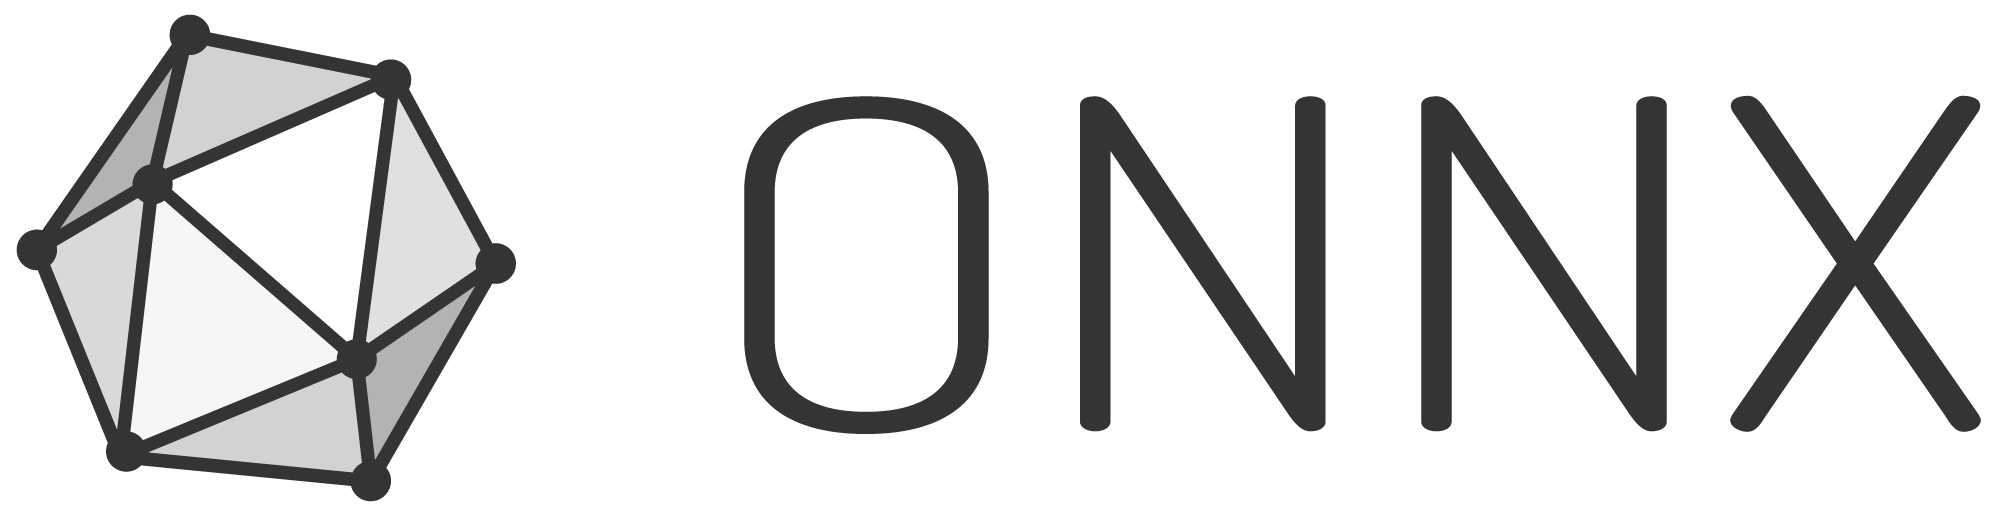 ONNX_logo_main.png